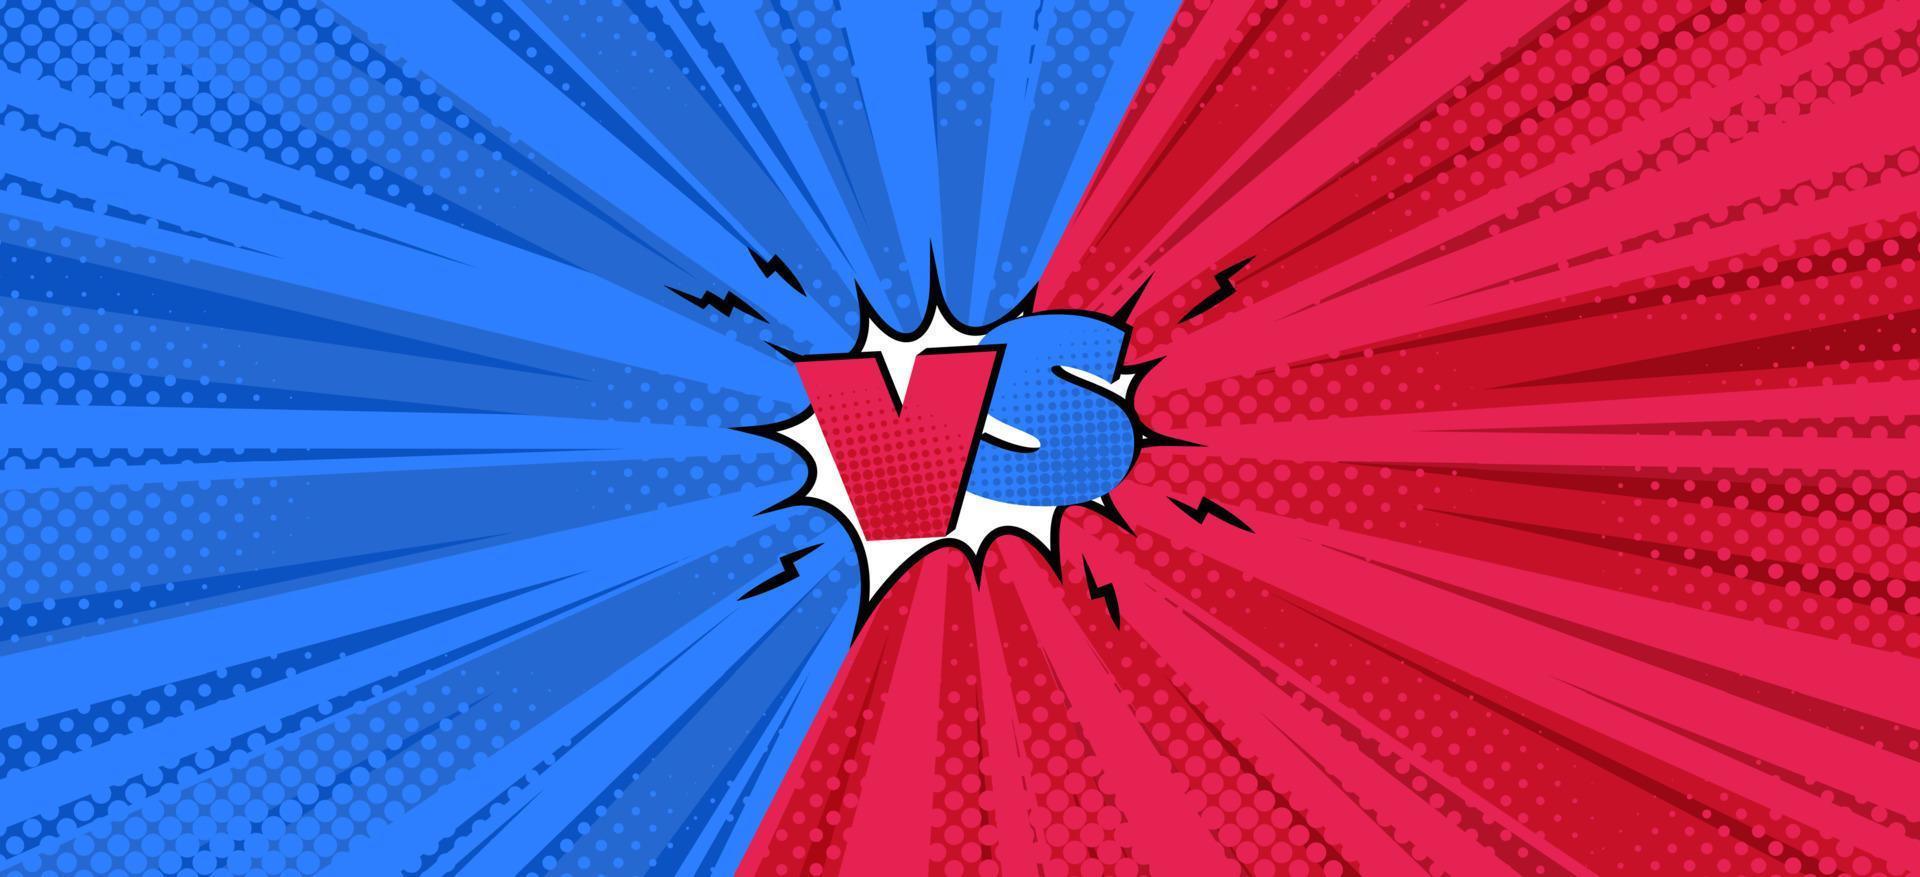 Versus symbol in comic background for battles. Halftone comic design. Vector illustration